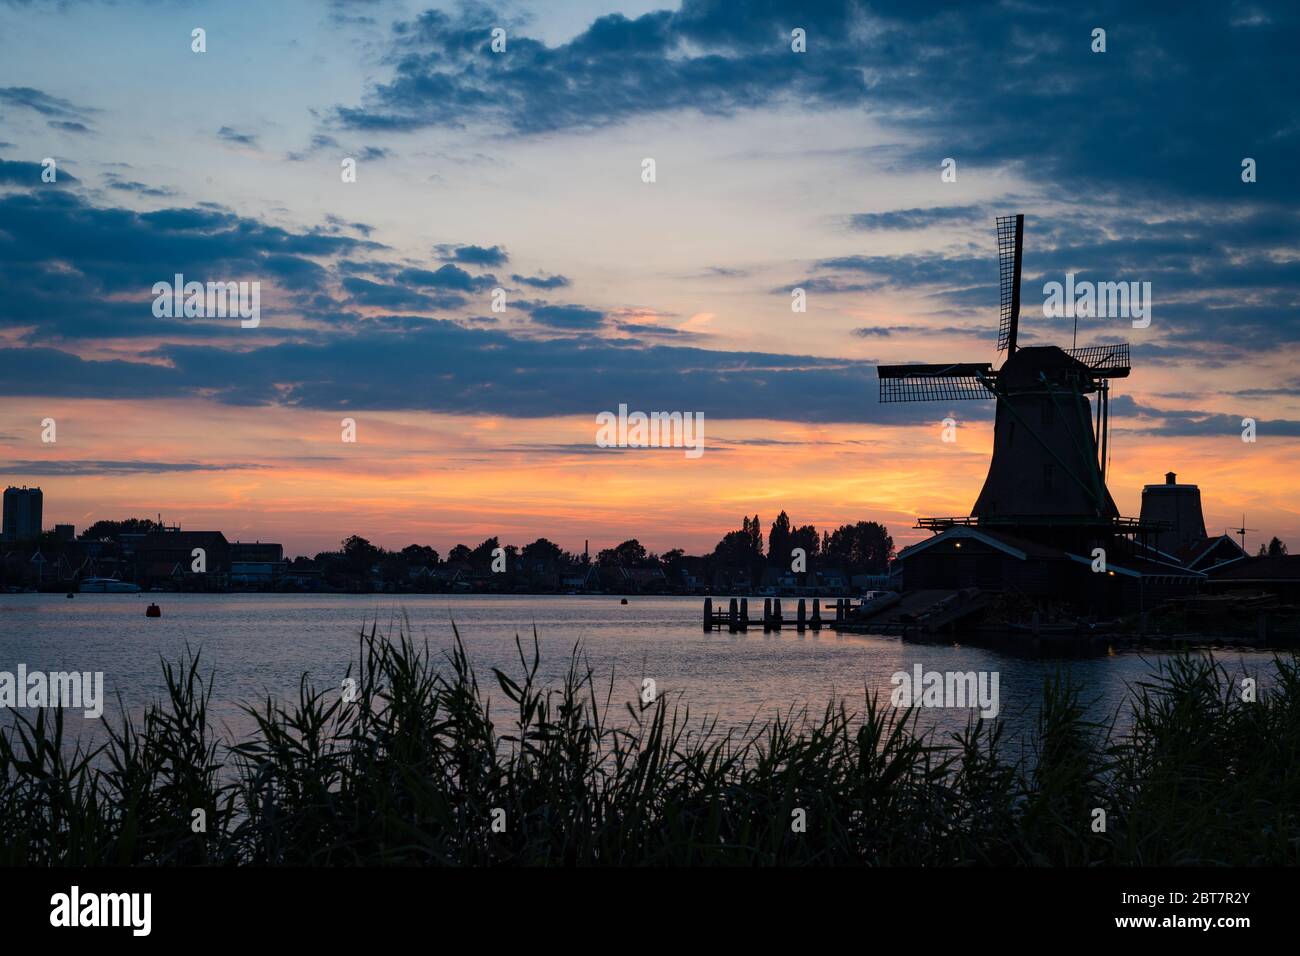 The windmills of Zaanse Schans at dusk, Netherlands Stock Photo